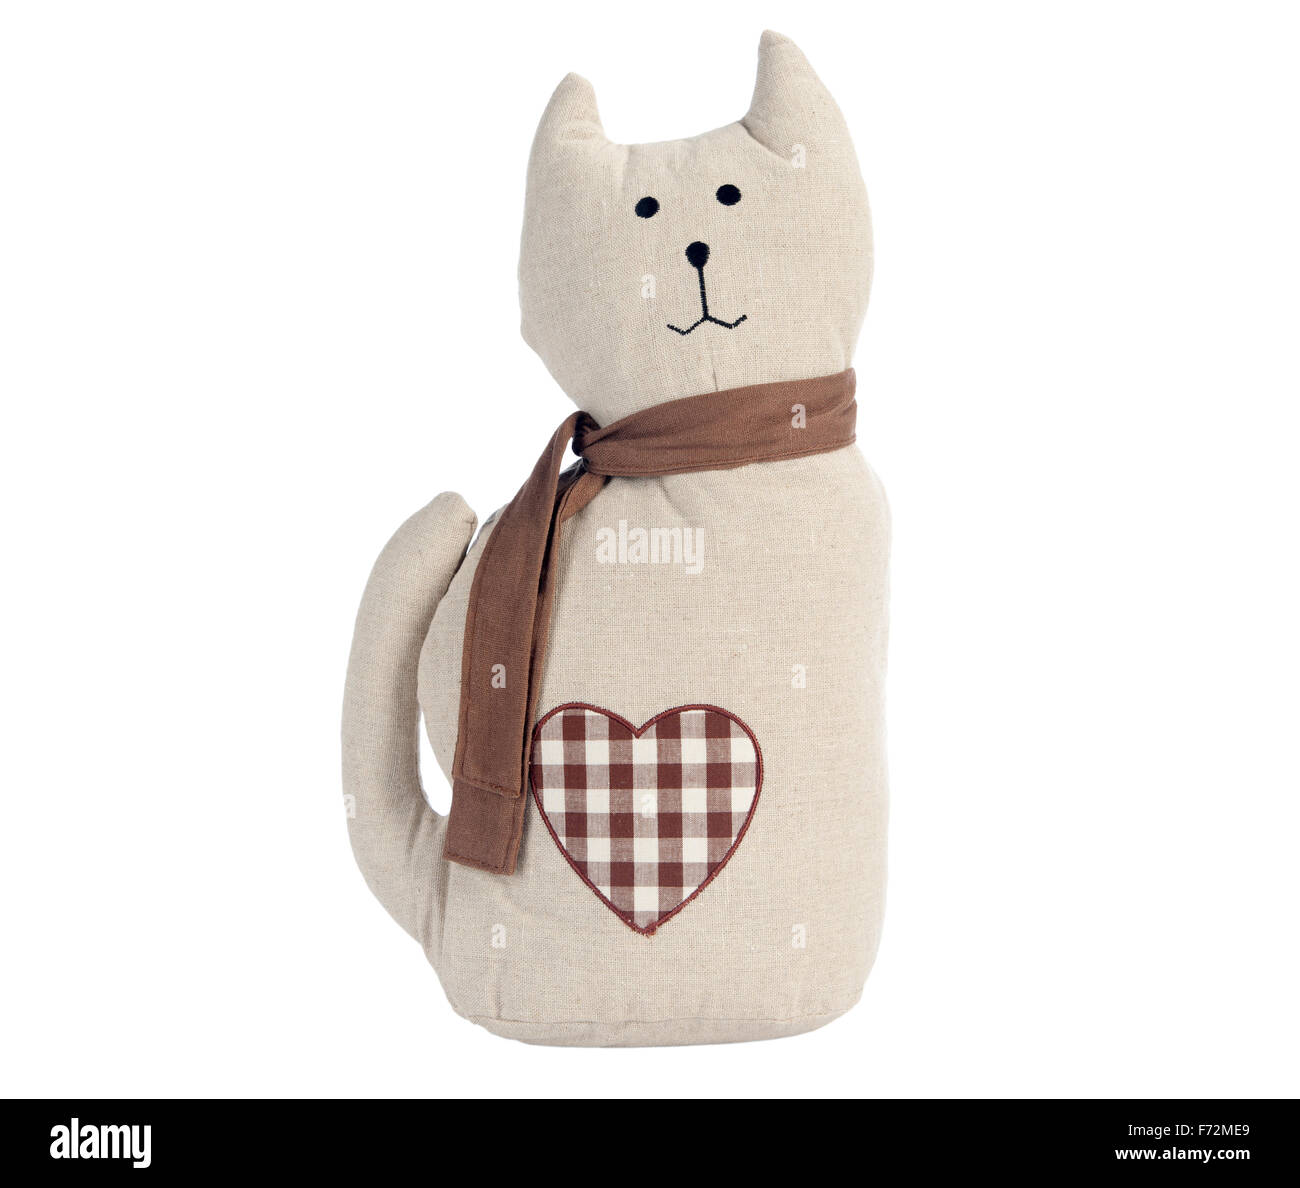 Gracioso gato juguete artesanal aislado en blanco, tela de patrón Foto de stock